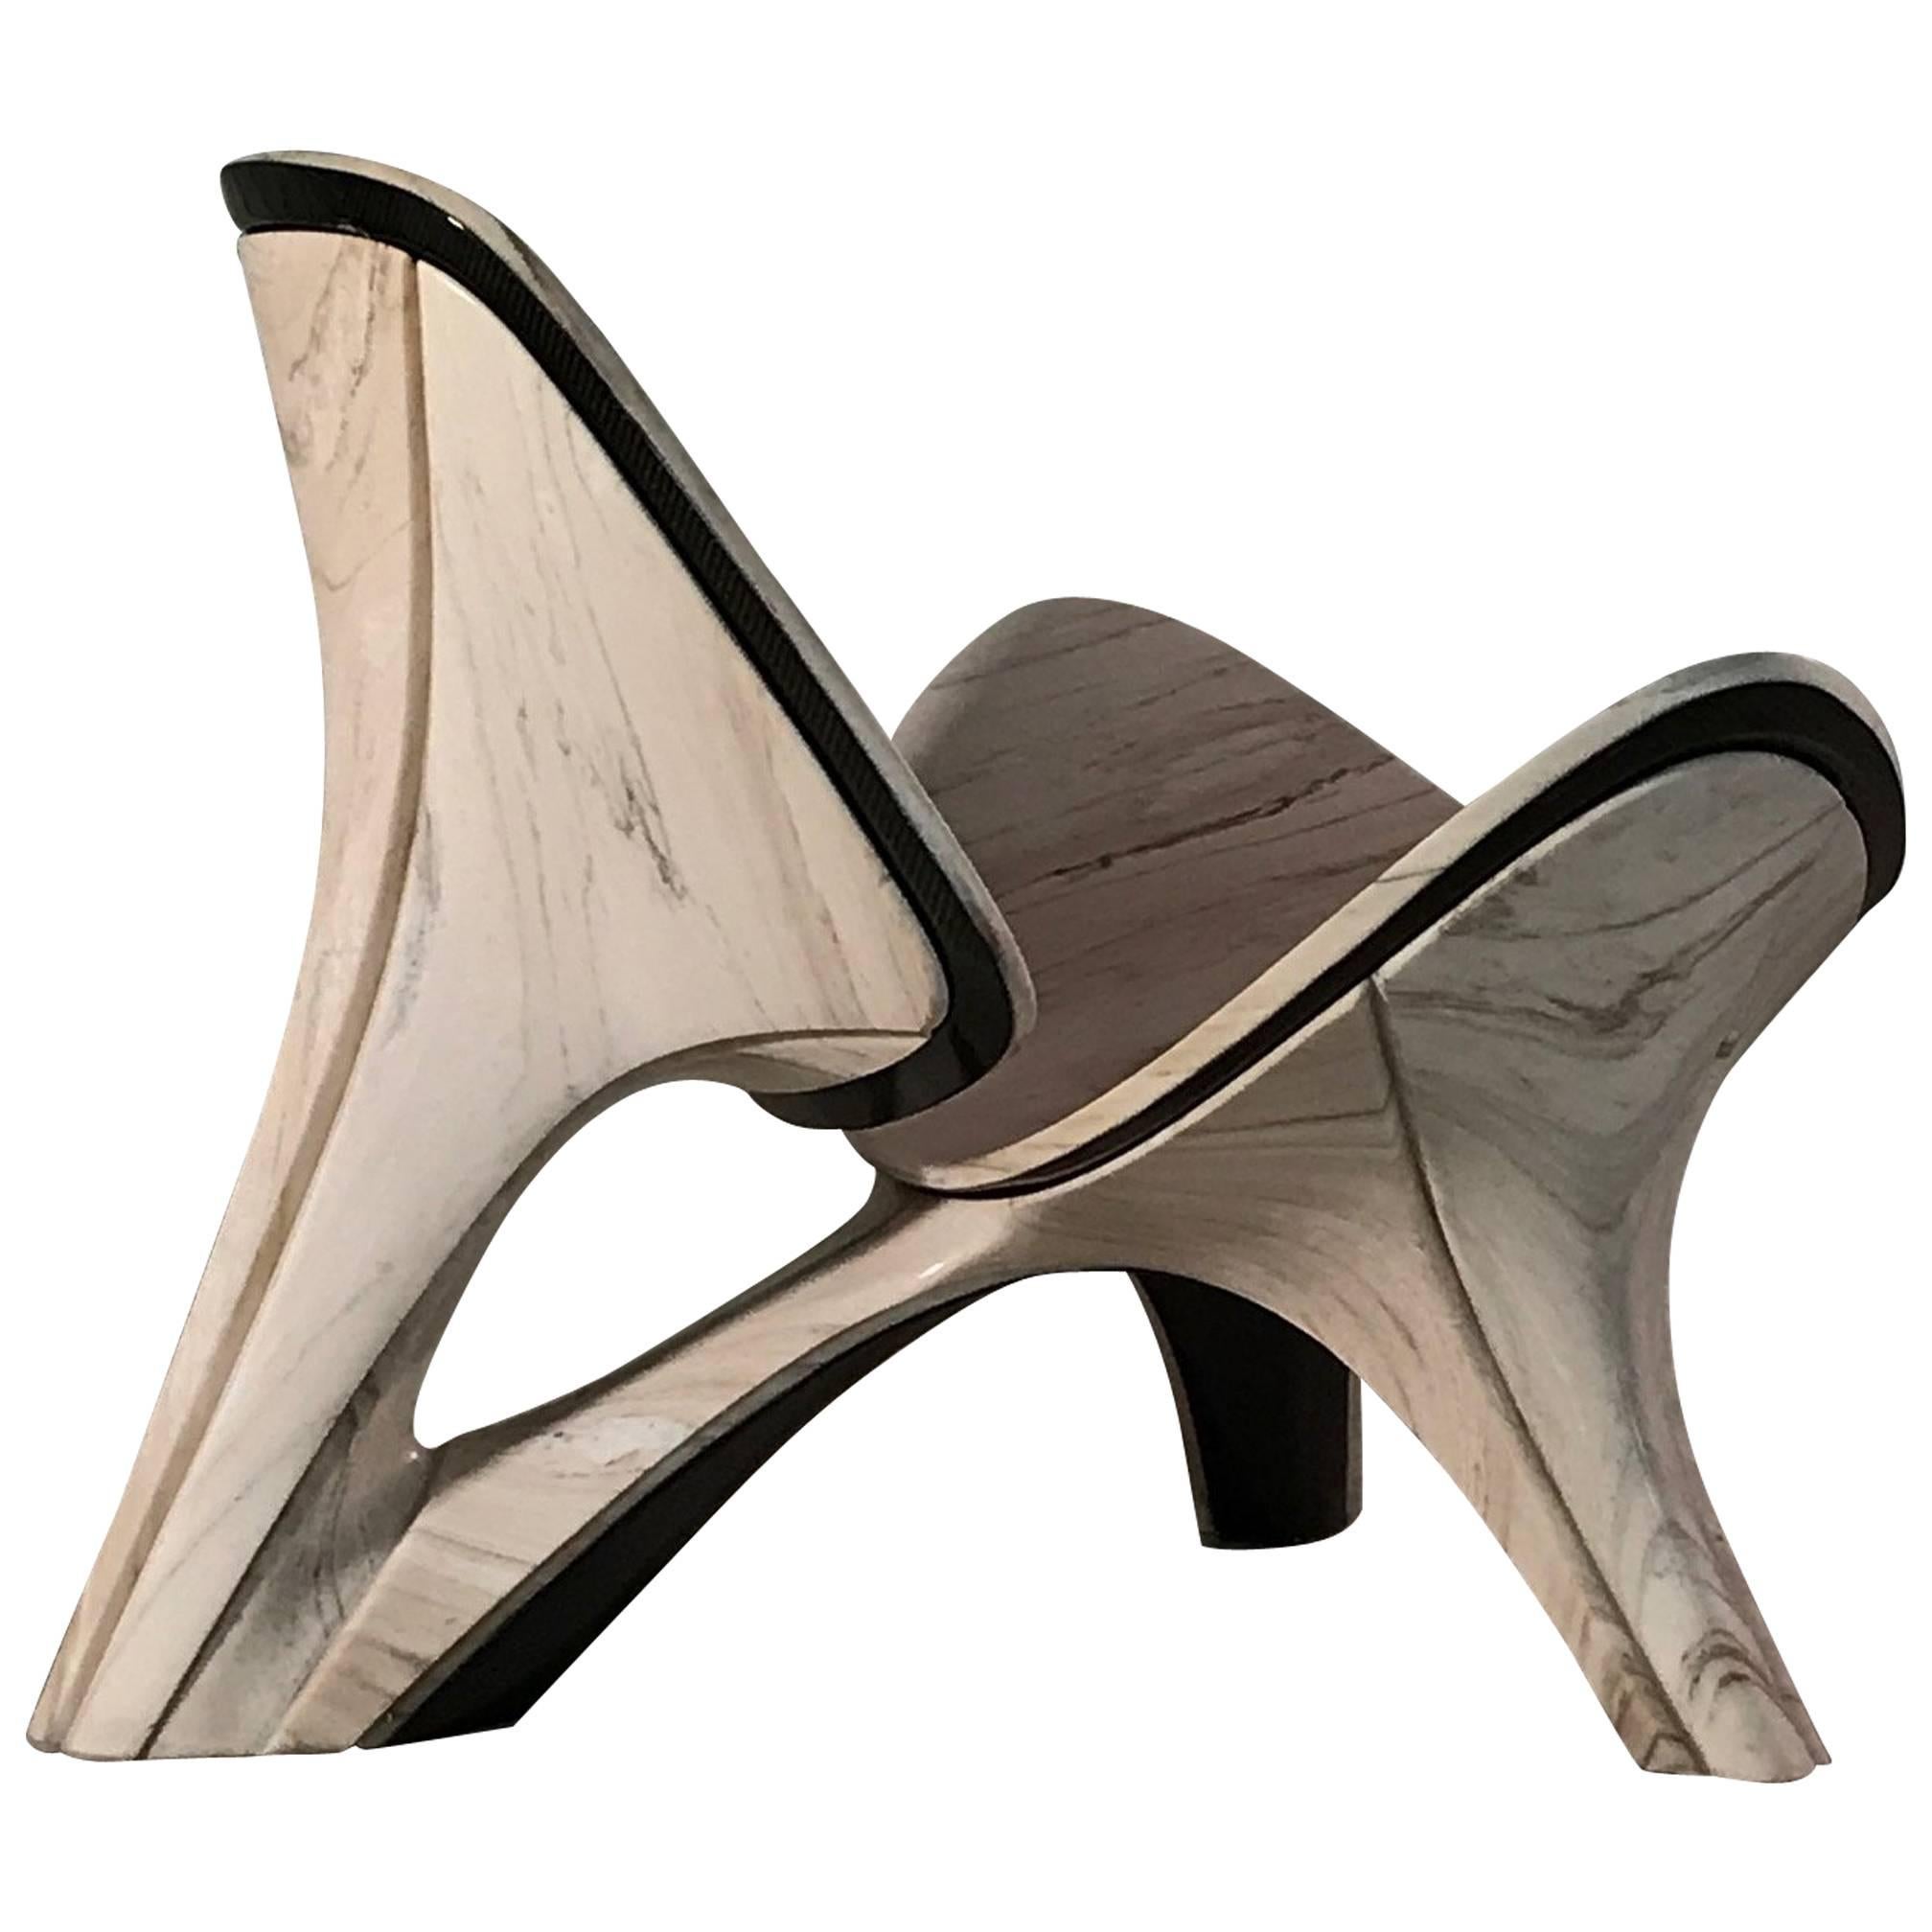 The 'Wegner' reinterpreted Lapella Marble Chair - Design Zaha Hadid Architects - For Sale